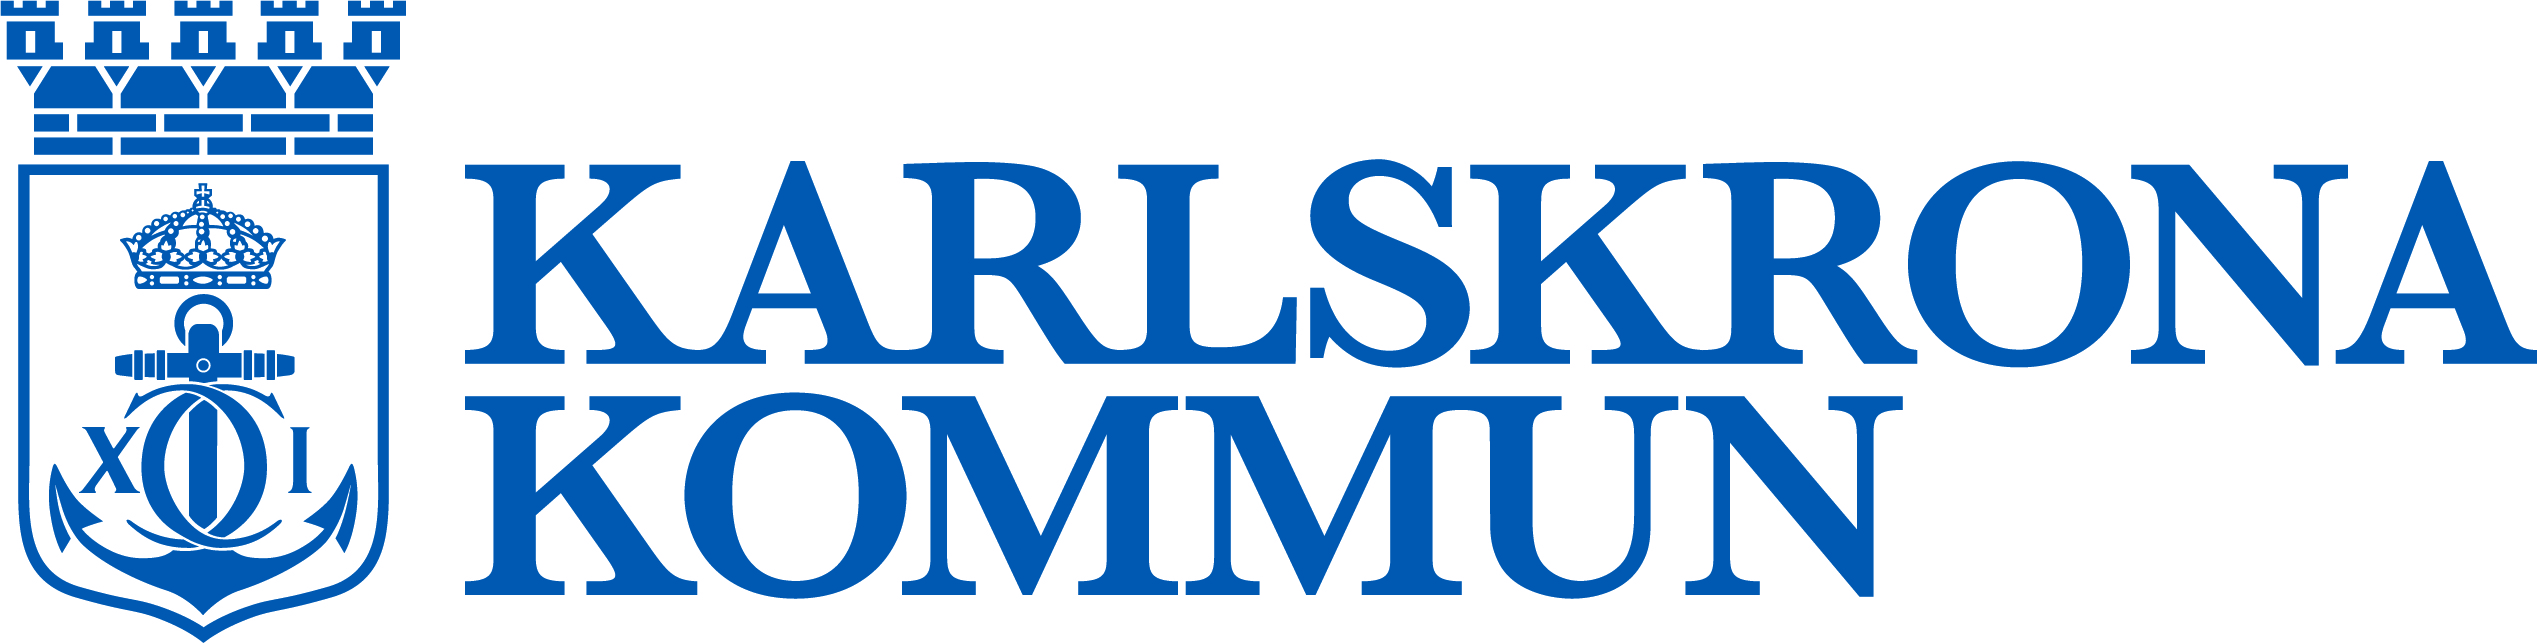 Karlskrona kommuns logotype